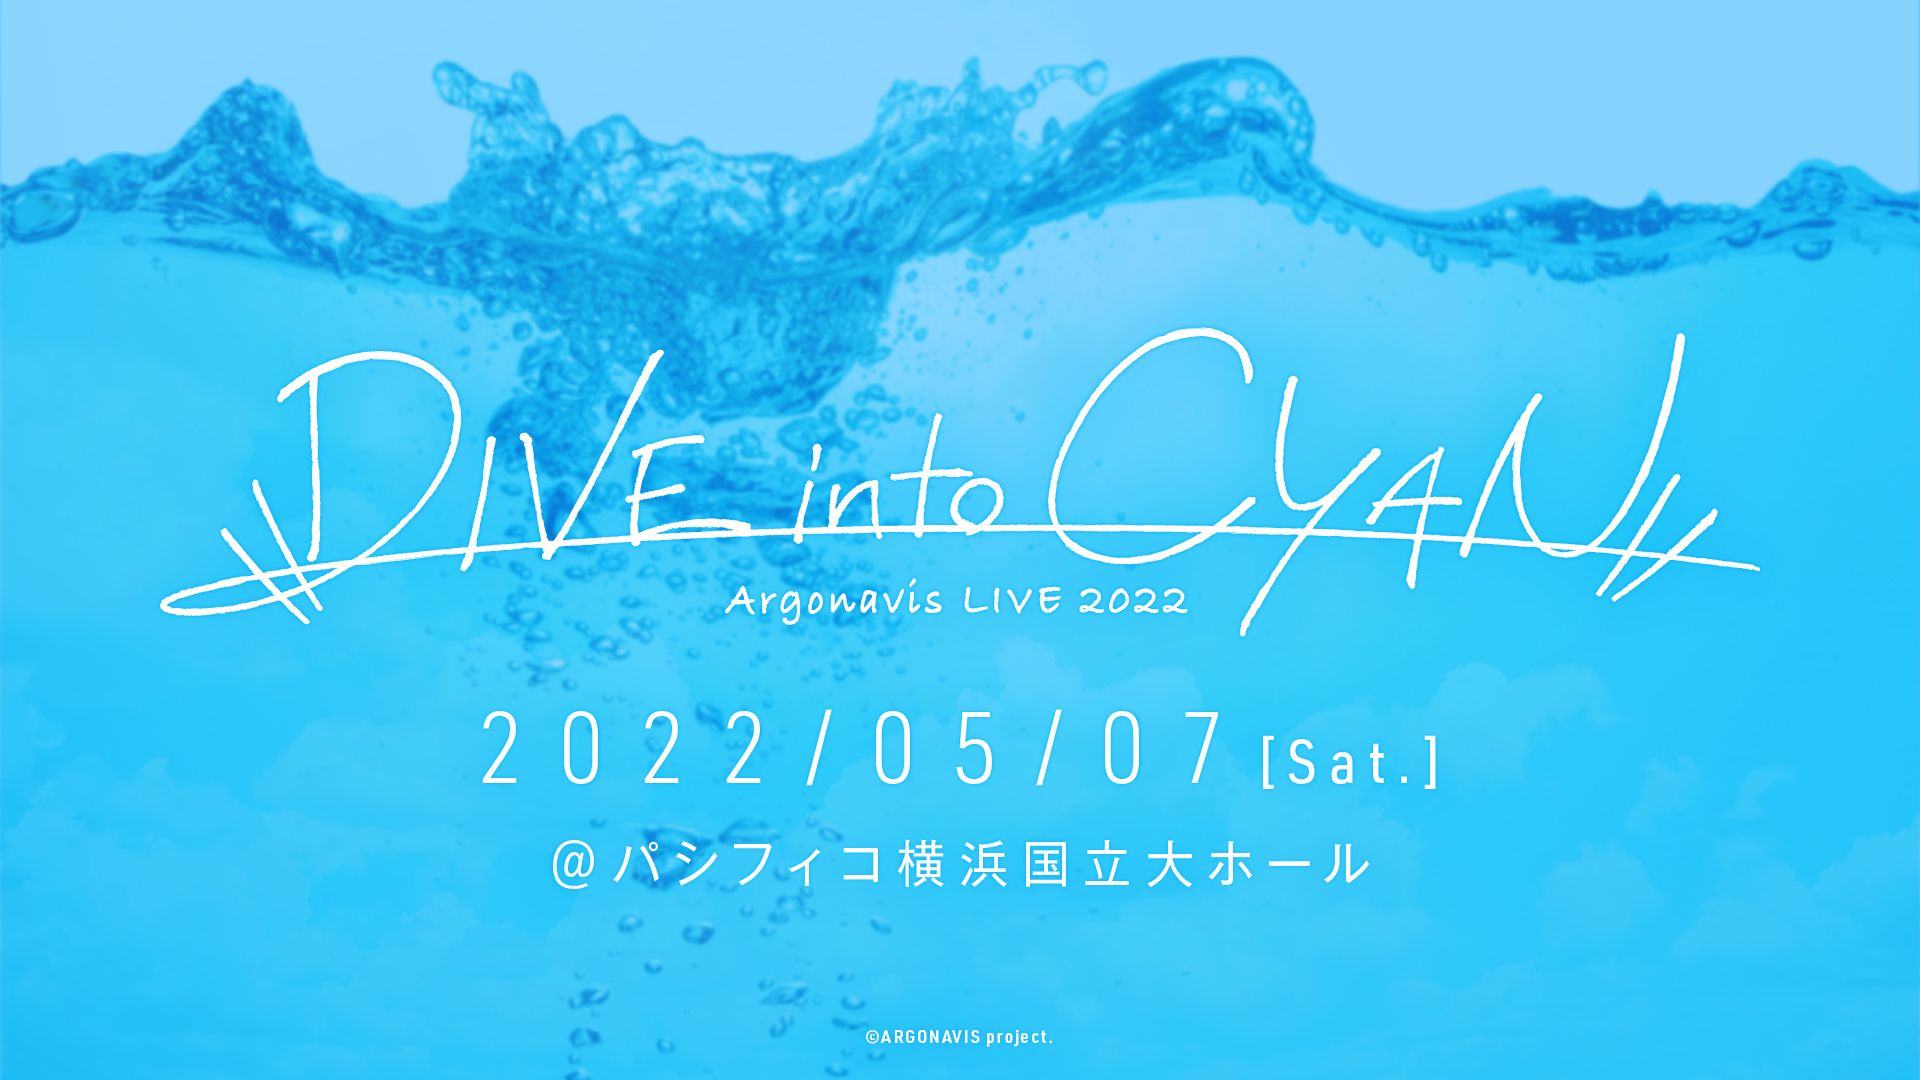 [Streaming+] Argonavis LIVE 2022 ーDIVE into CYANー